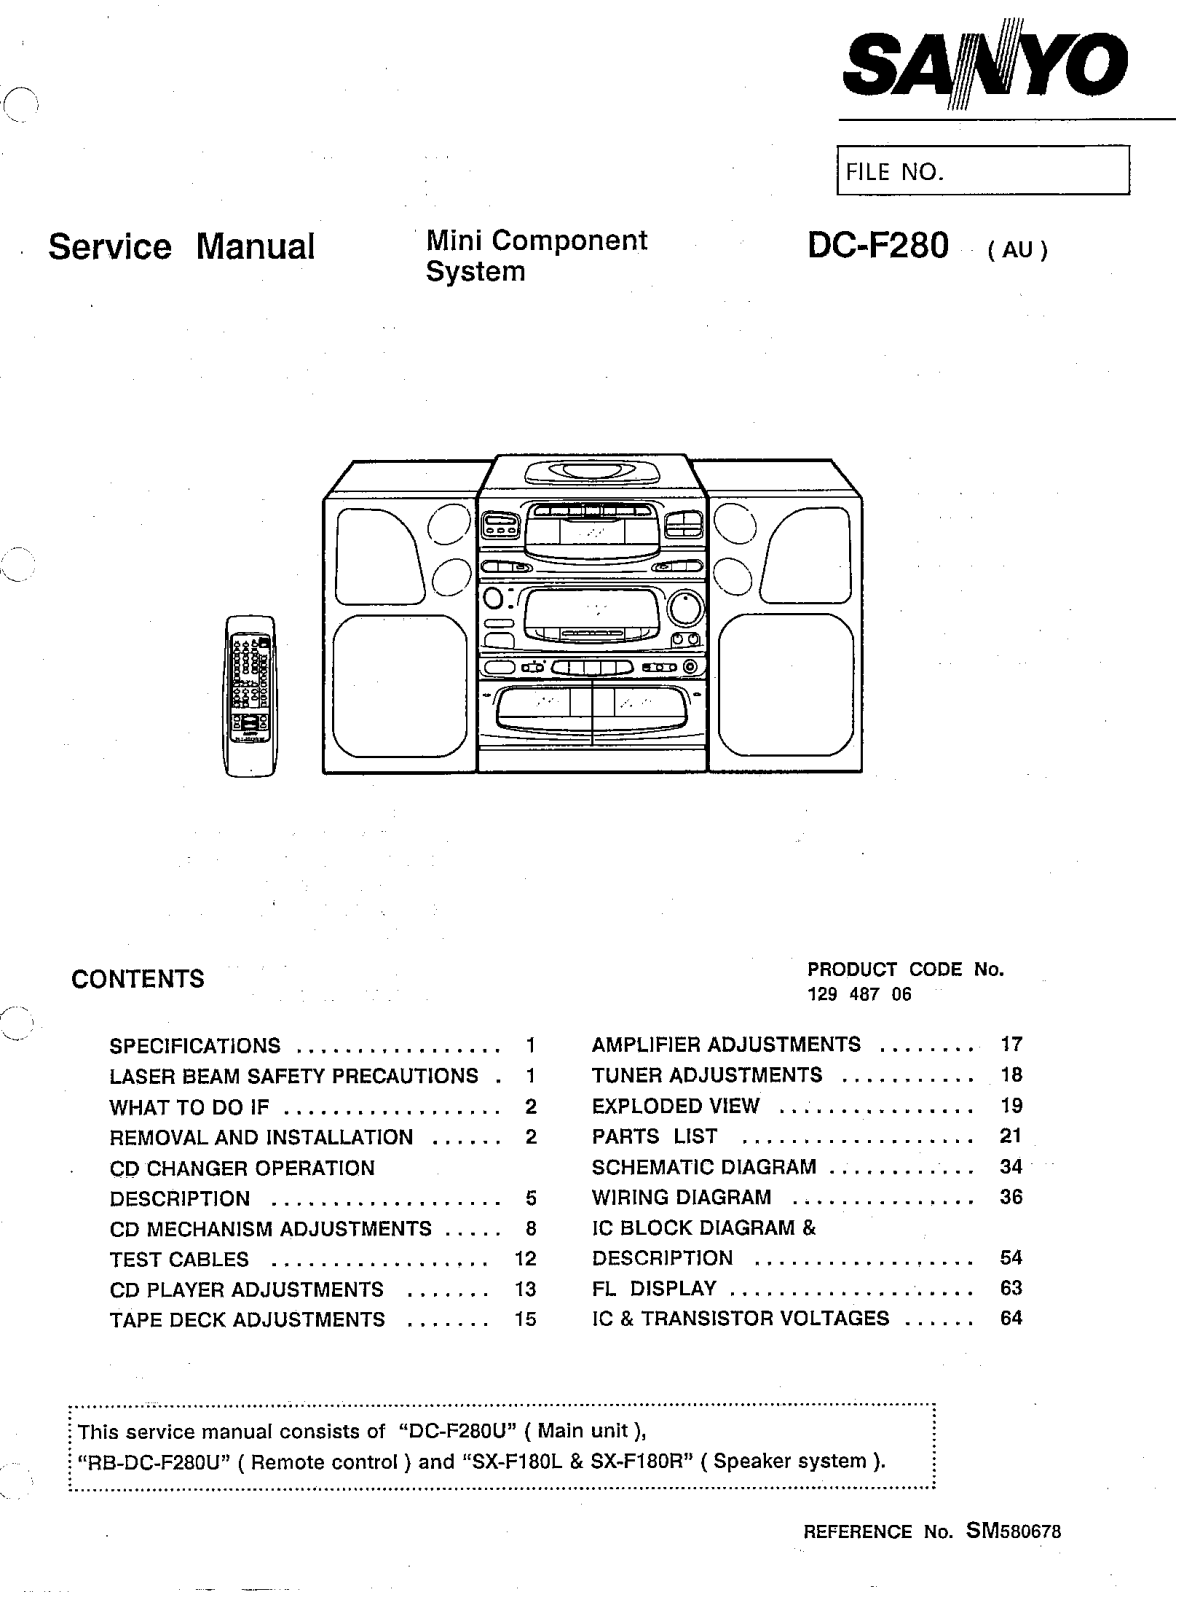 Sanyo DCF-280 Service manual